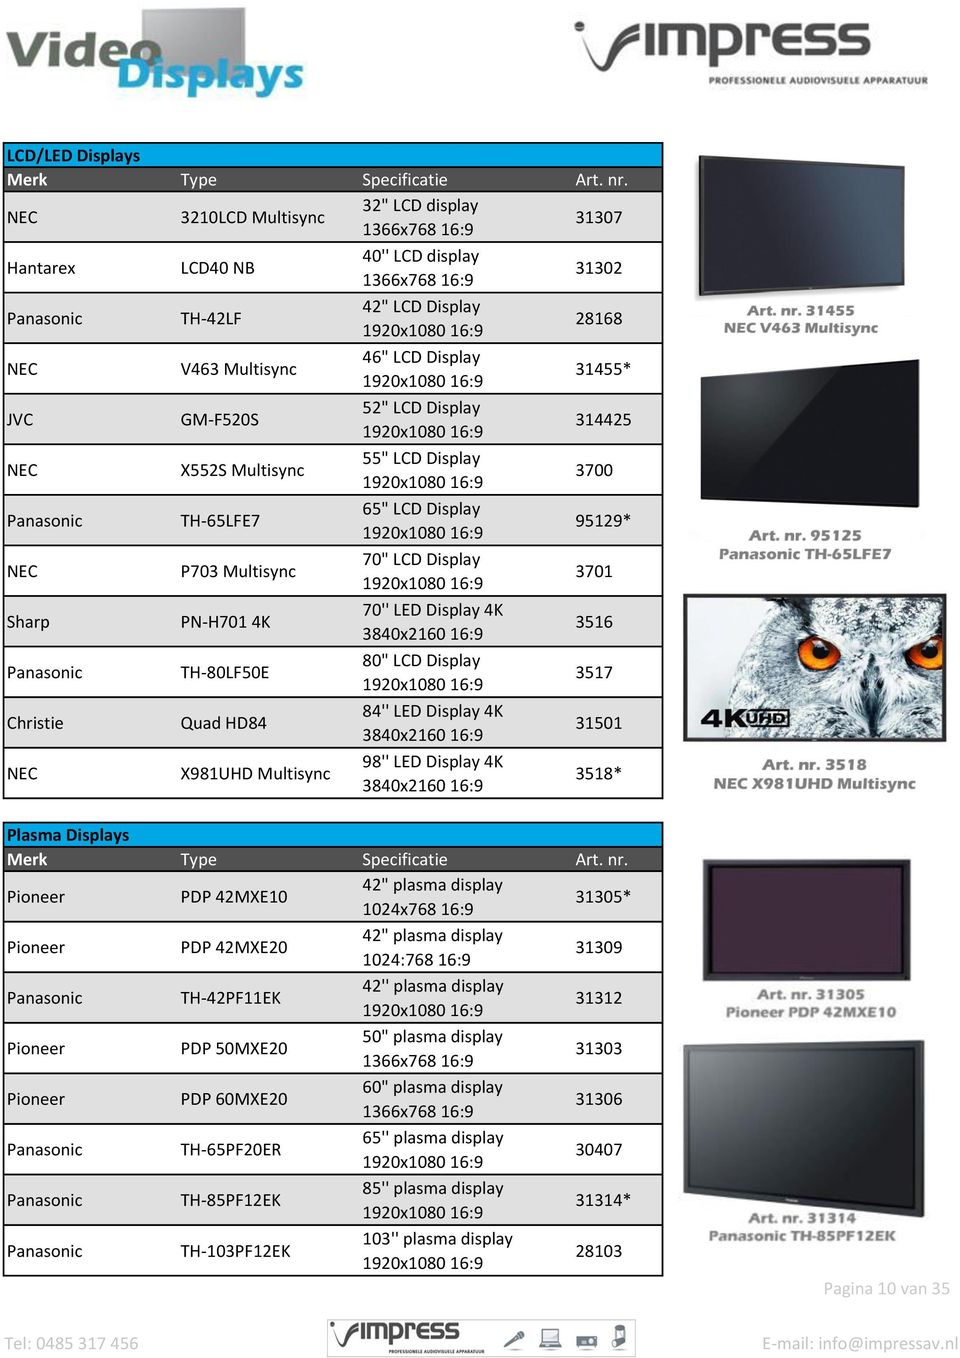 Multisync 70" LCD Display 1920x1080 16:9 3701 Sharp PN-H701 4K 70'' LED Display 4K 3840x2160 16:9 3516 TH-80LF50E 80" LCD Display 1920x1080 16:9 3517 Christie Quad HD84 84'' LED Display 4K 3840x2160